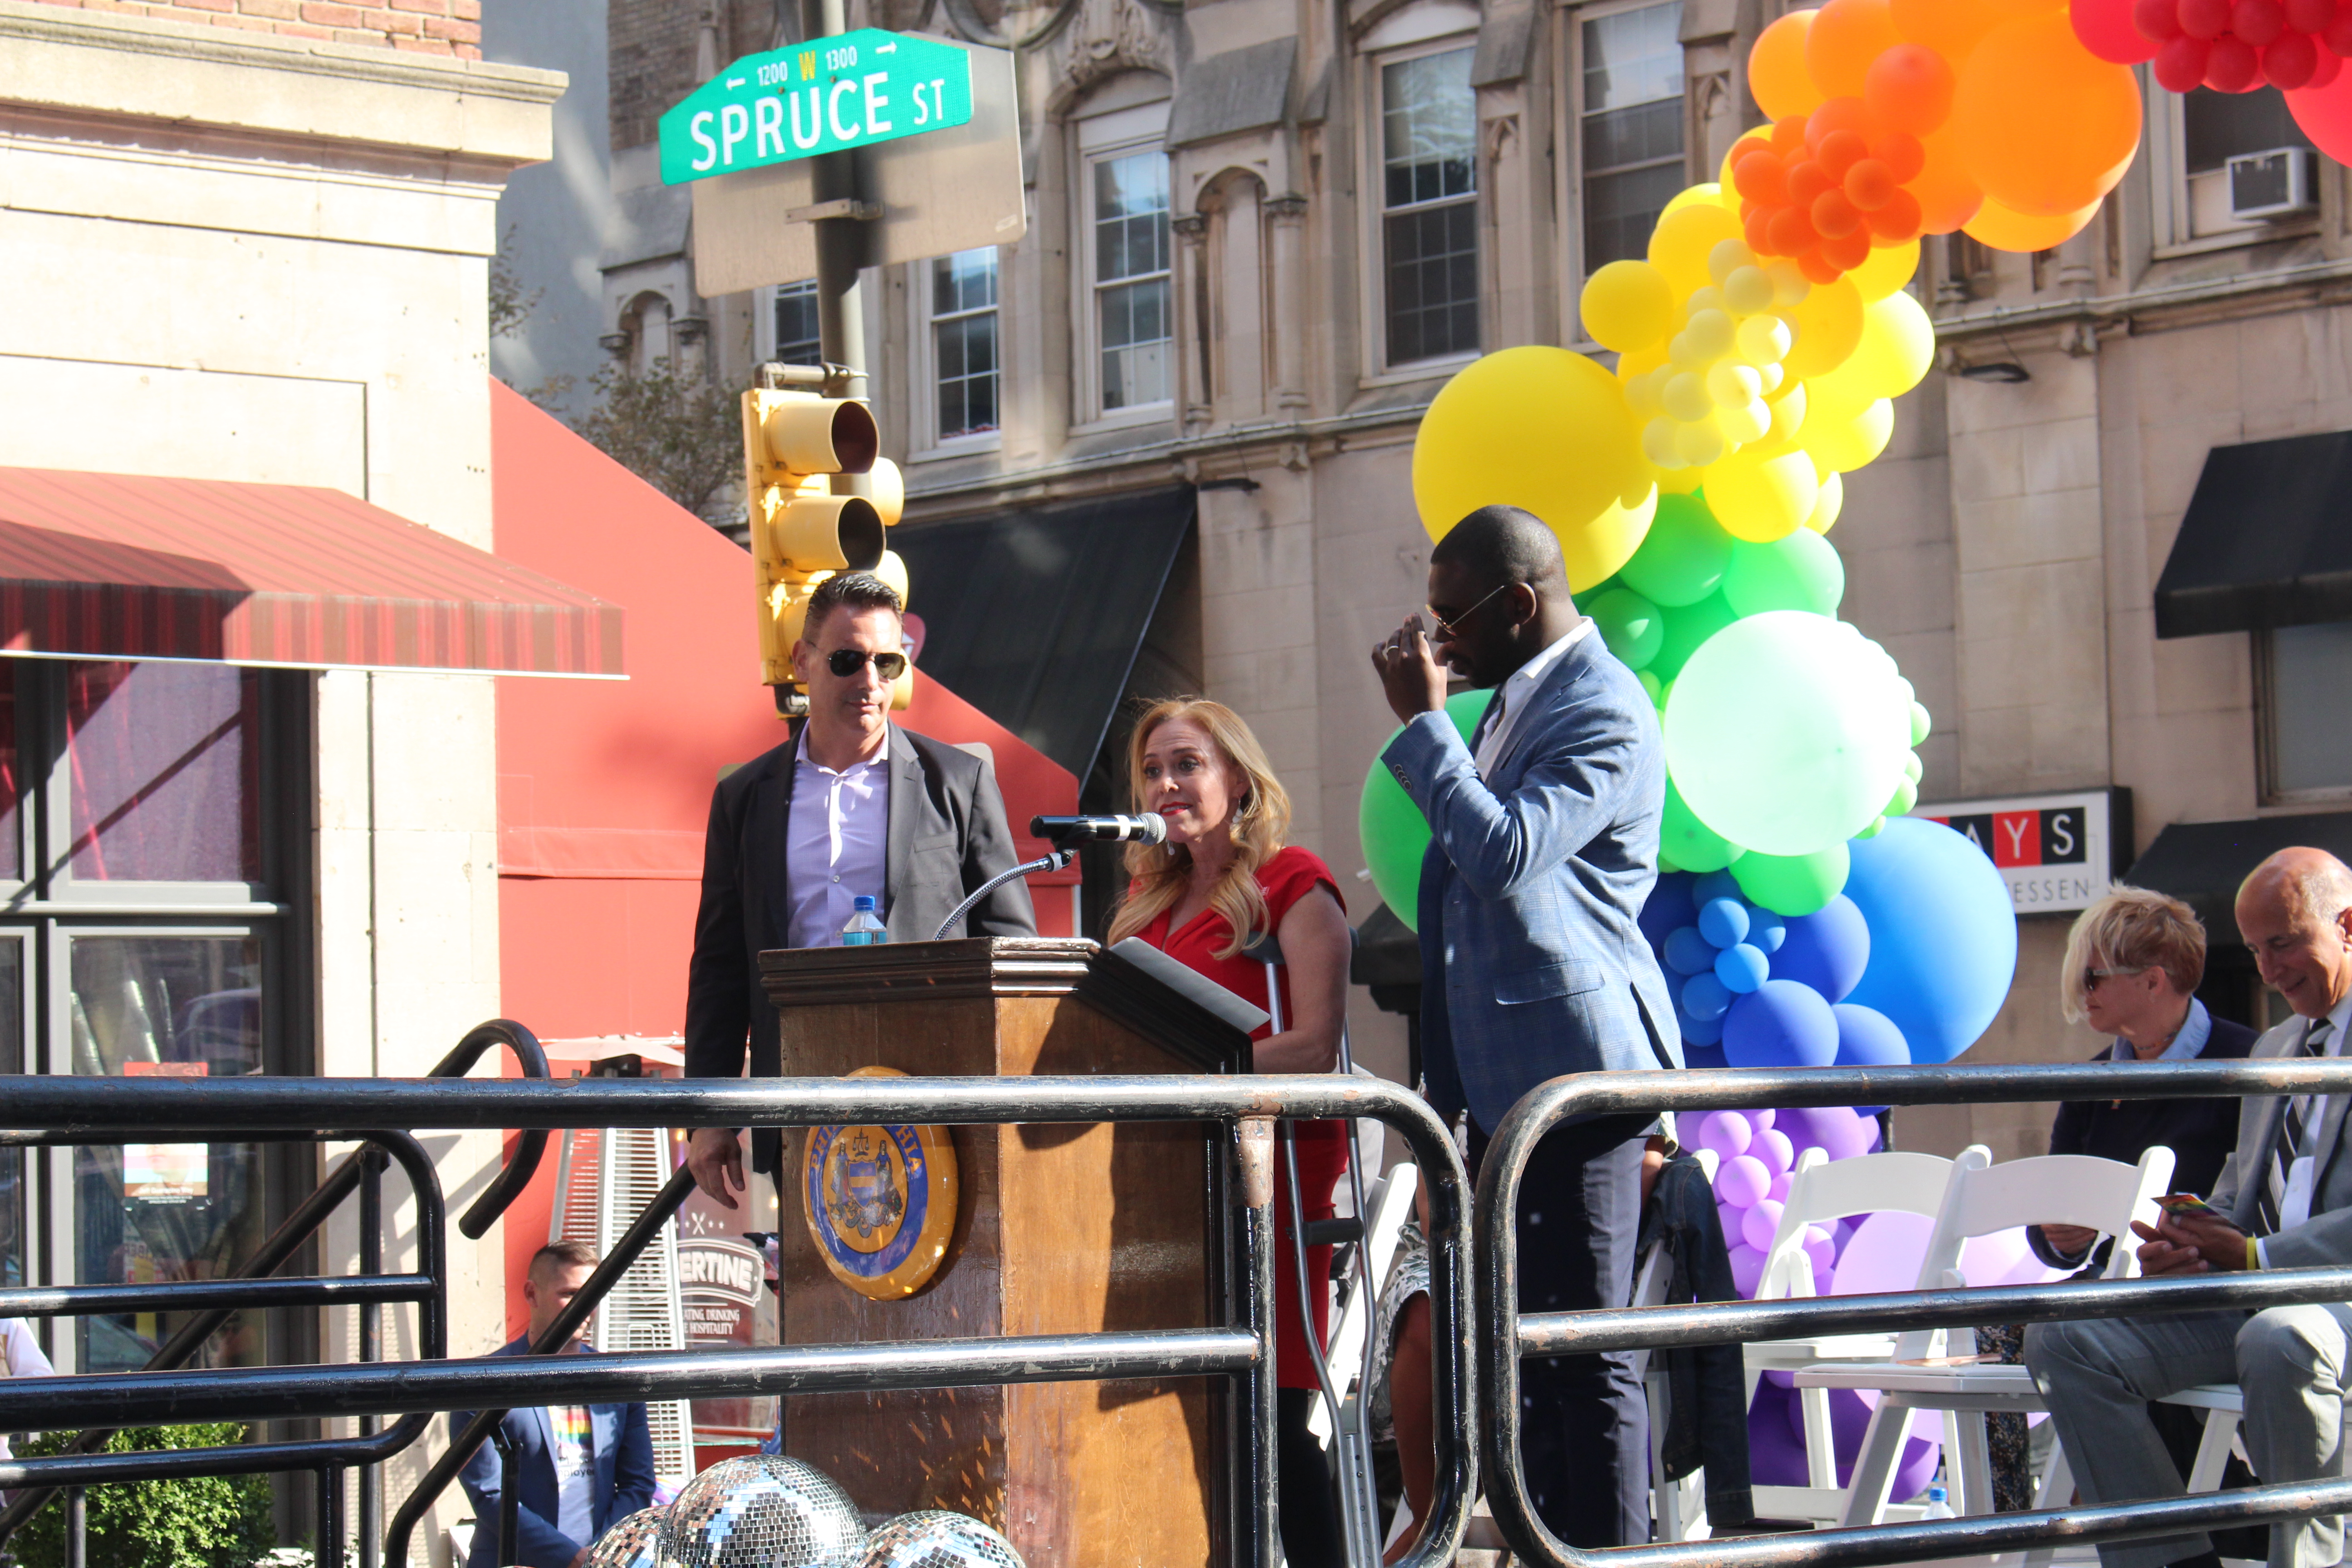 Sheila Hess, City Representative (center), Joshua Thomas (right), and Jerry Guaracino (left) at the podium together.